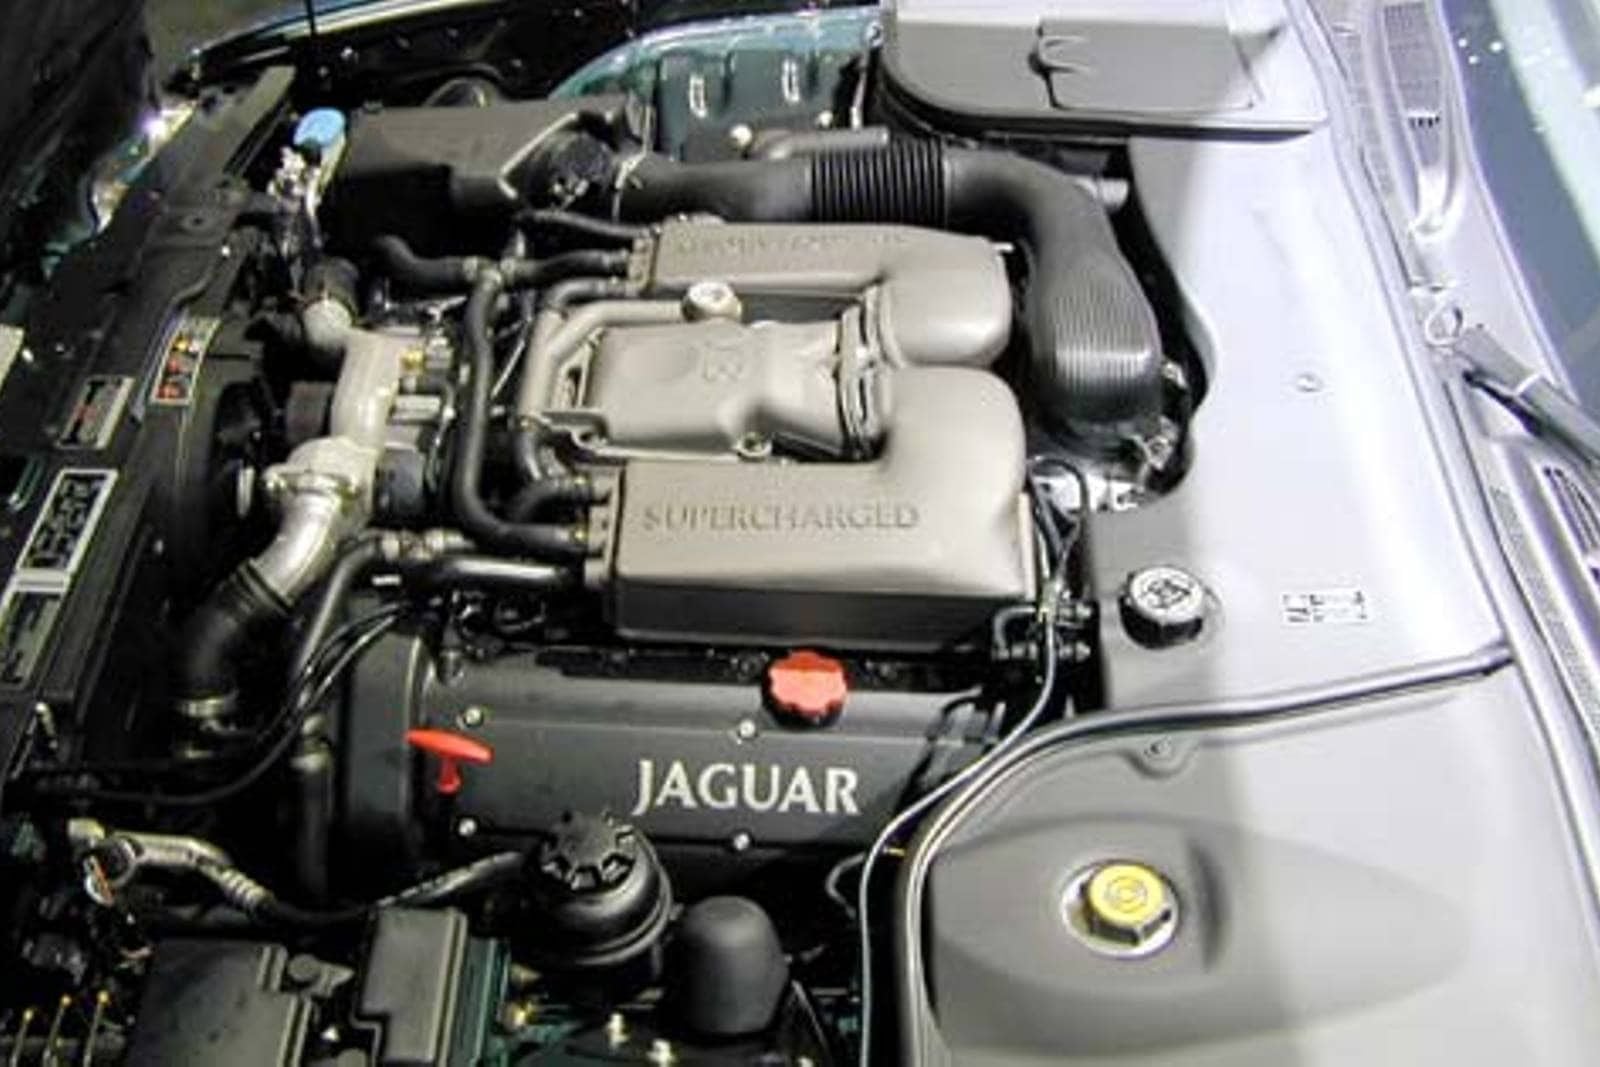 2002 Jaguar XKR - 2002 Jaguar XKR Convertible, metal Anthracite Black Exterior, black Leather interior - Used - VIN SAJDA42B32PA26563 - 61,000 Miles - 8 cyl - 2WD - Automatic - Convertible - Black - Miami, FL 33178, United States